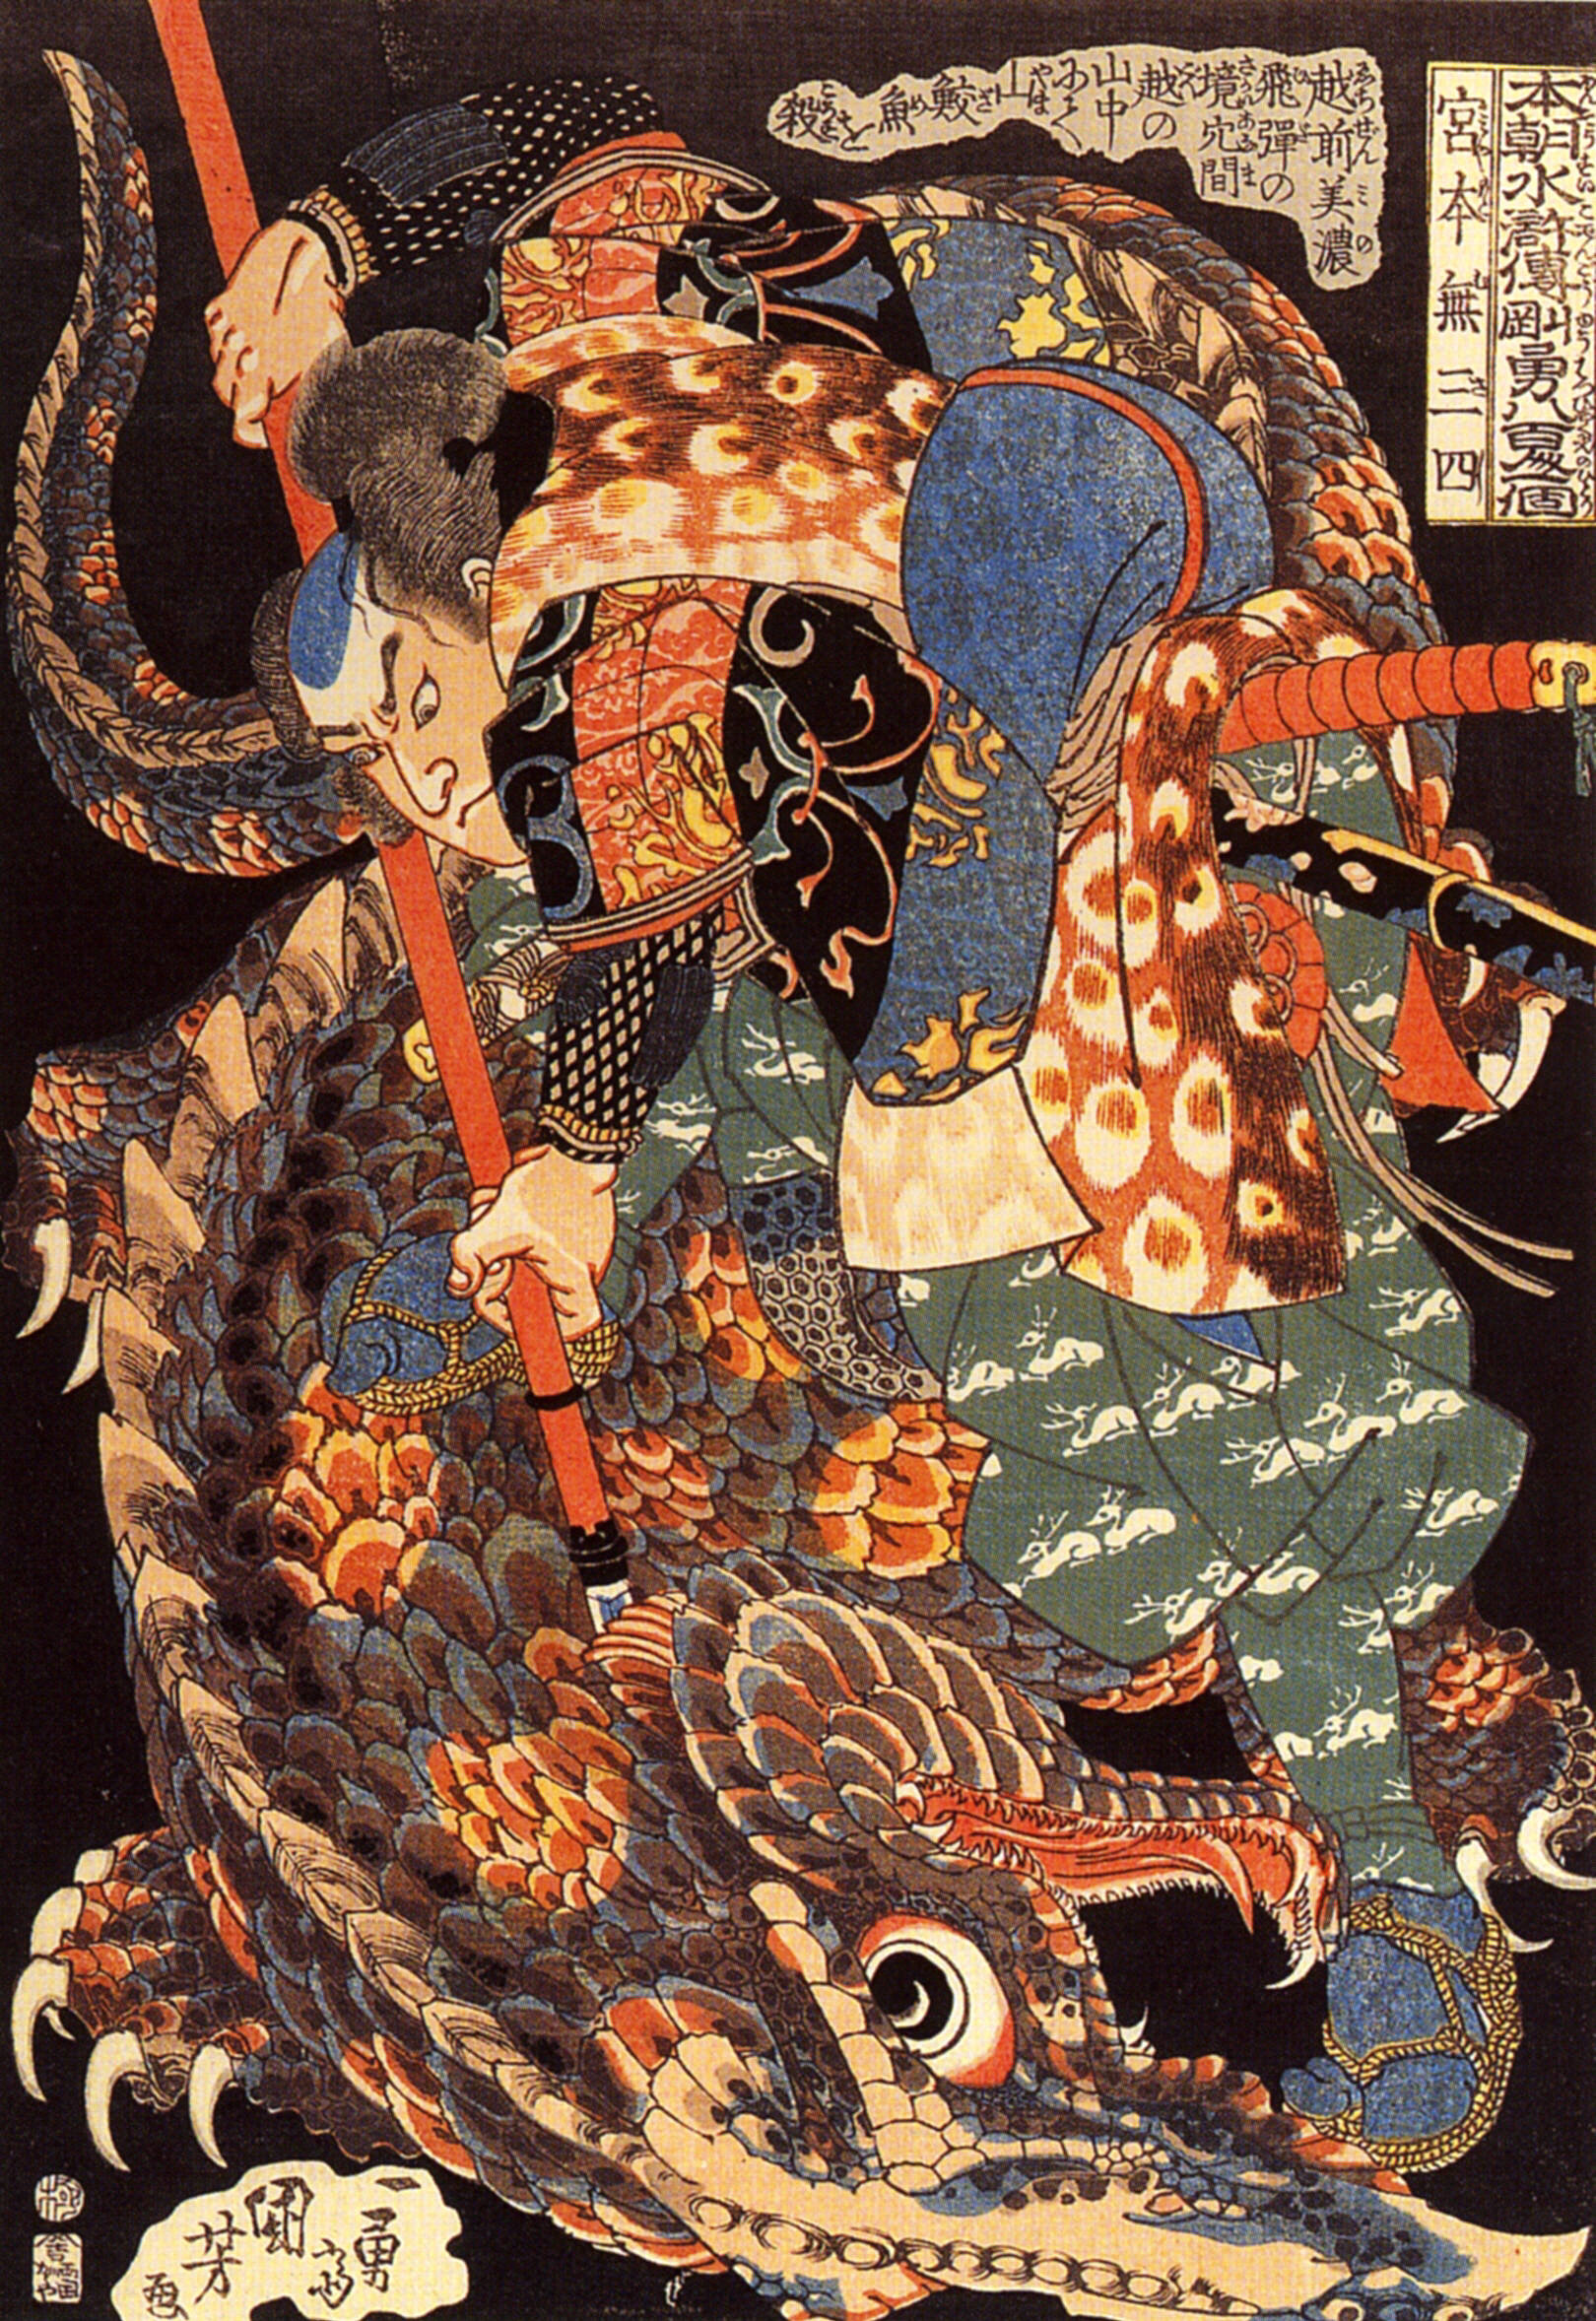 Musashi fighting a giant lizard, color woodcut by Kuniyoshi, around 1835